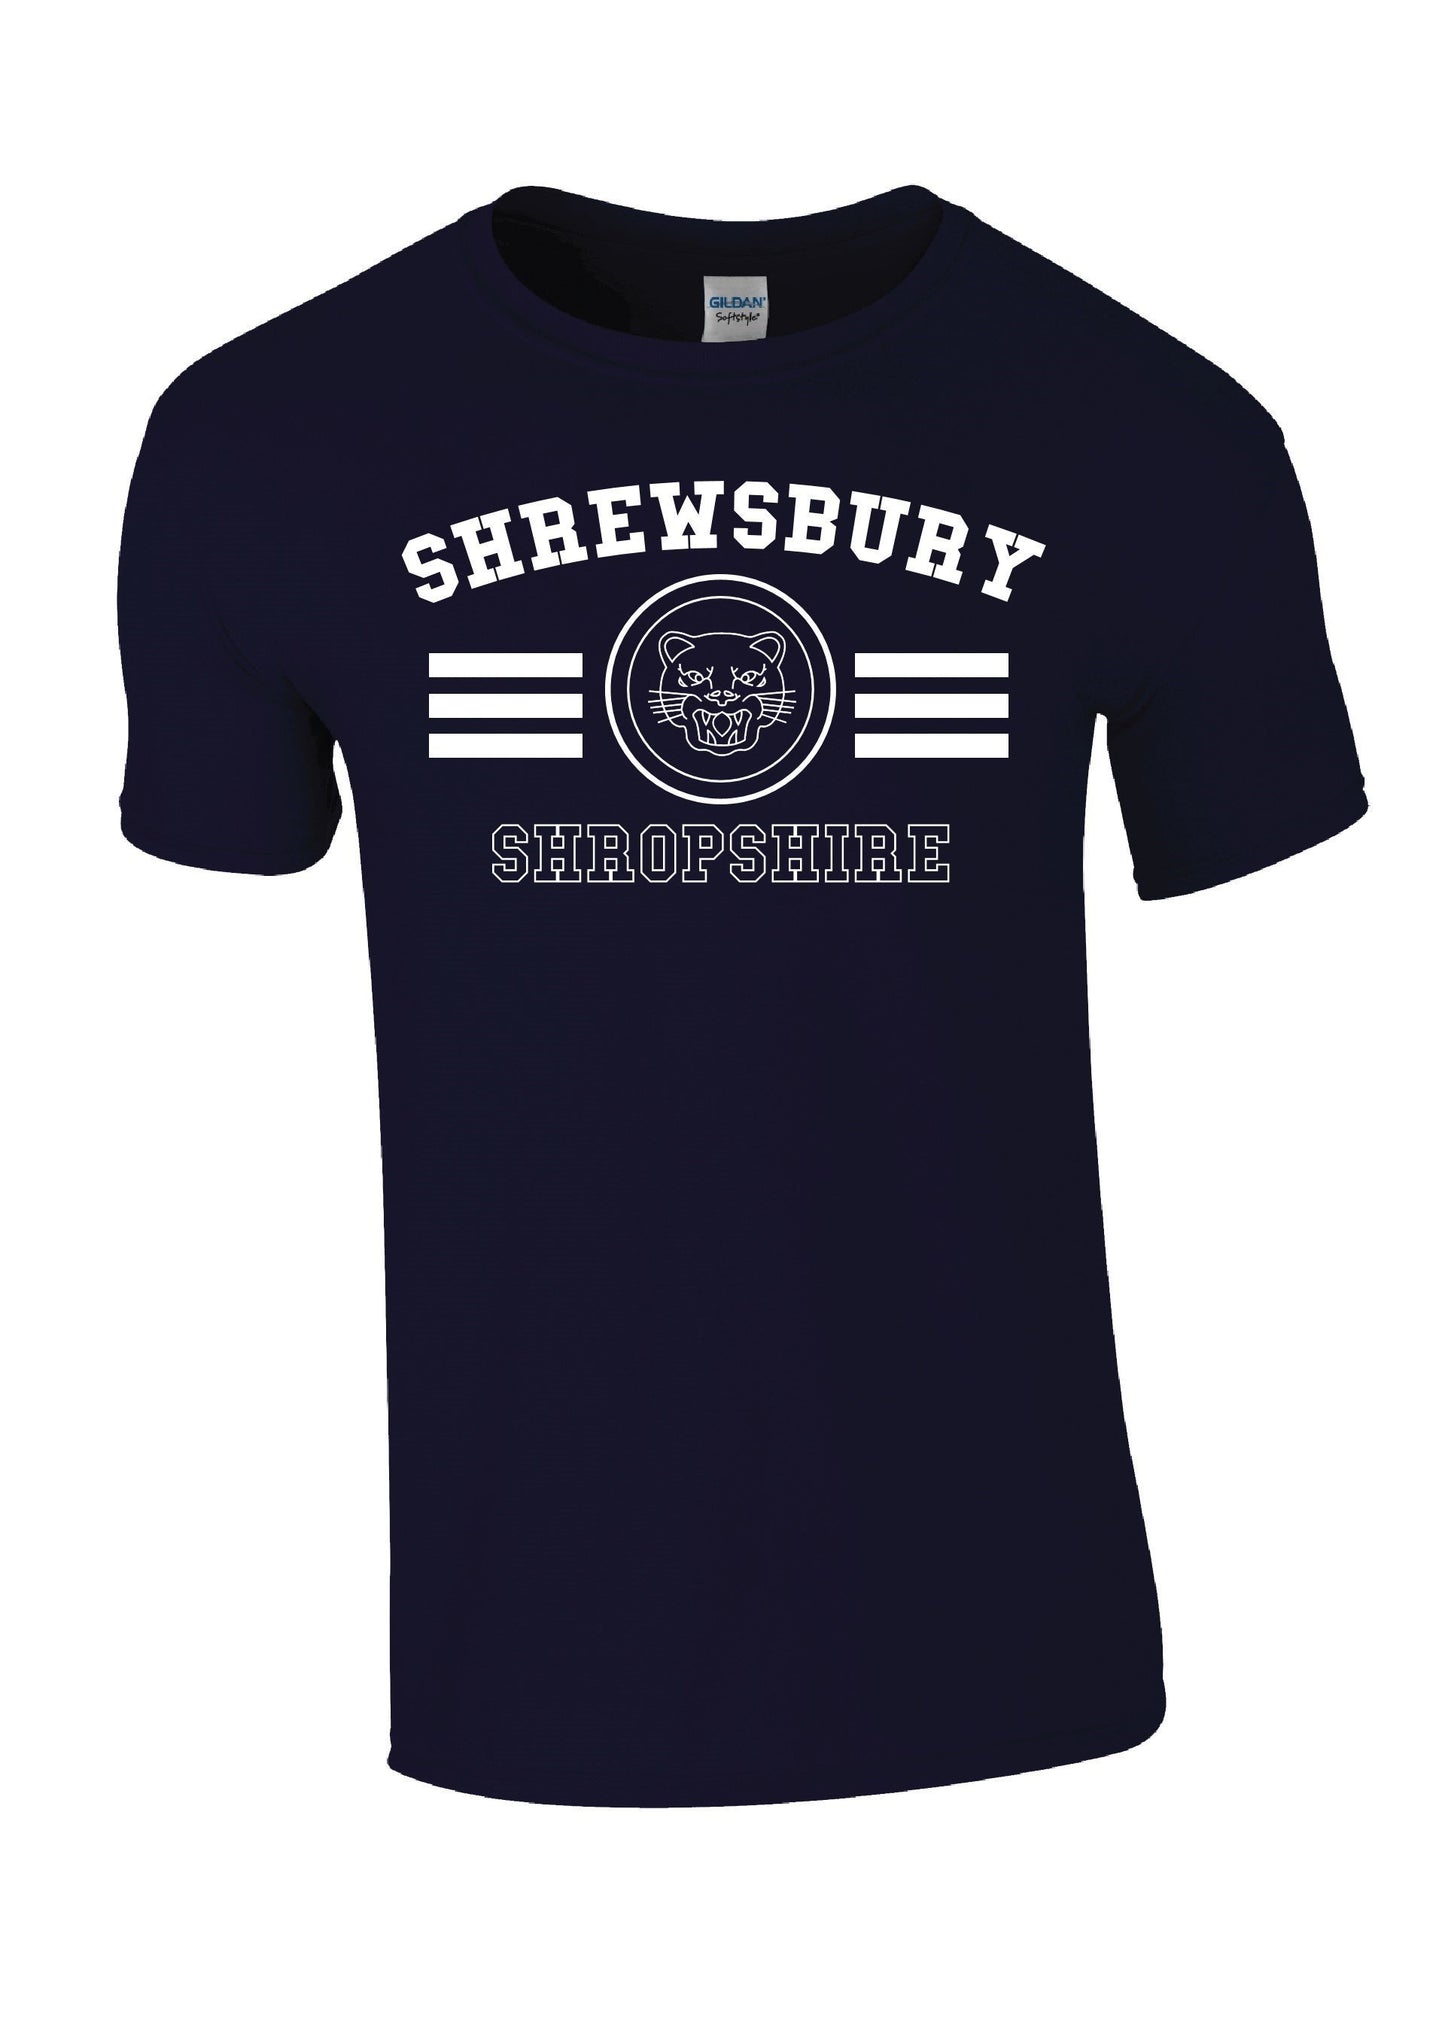 Shrewsbury Tiger Kids T-shirt - Navy - 9/10 yrs